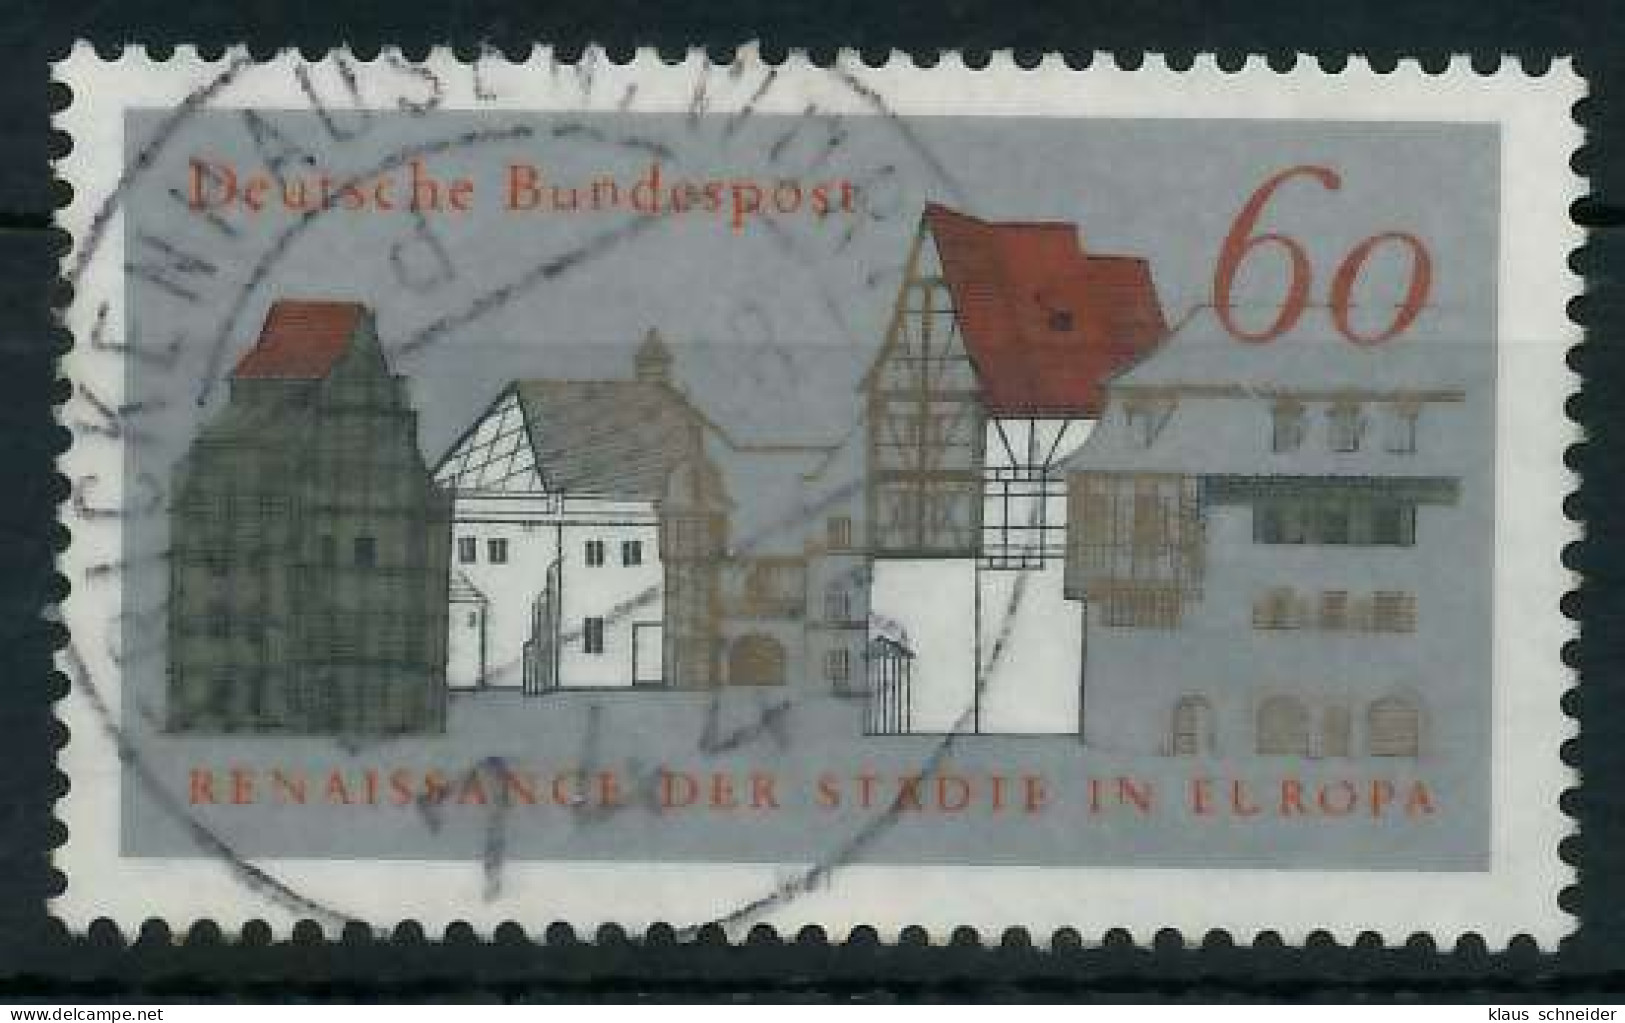 BRD BUND 1981 Nr 1084 Gestempelt X831A0E - Used Stamps